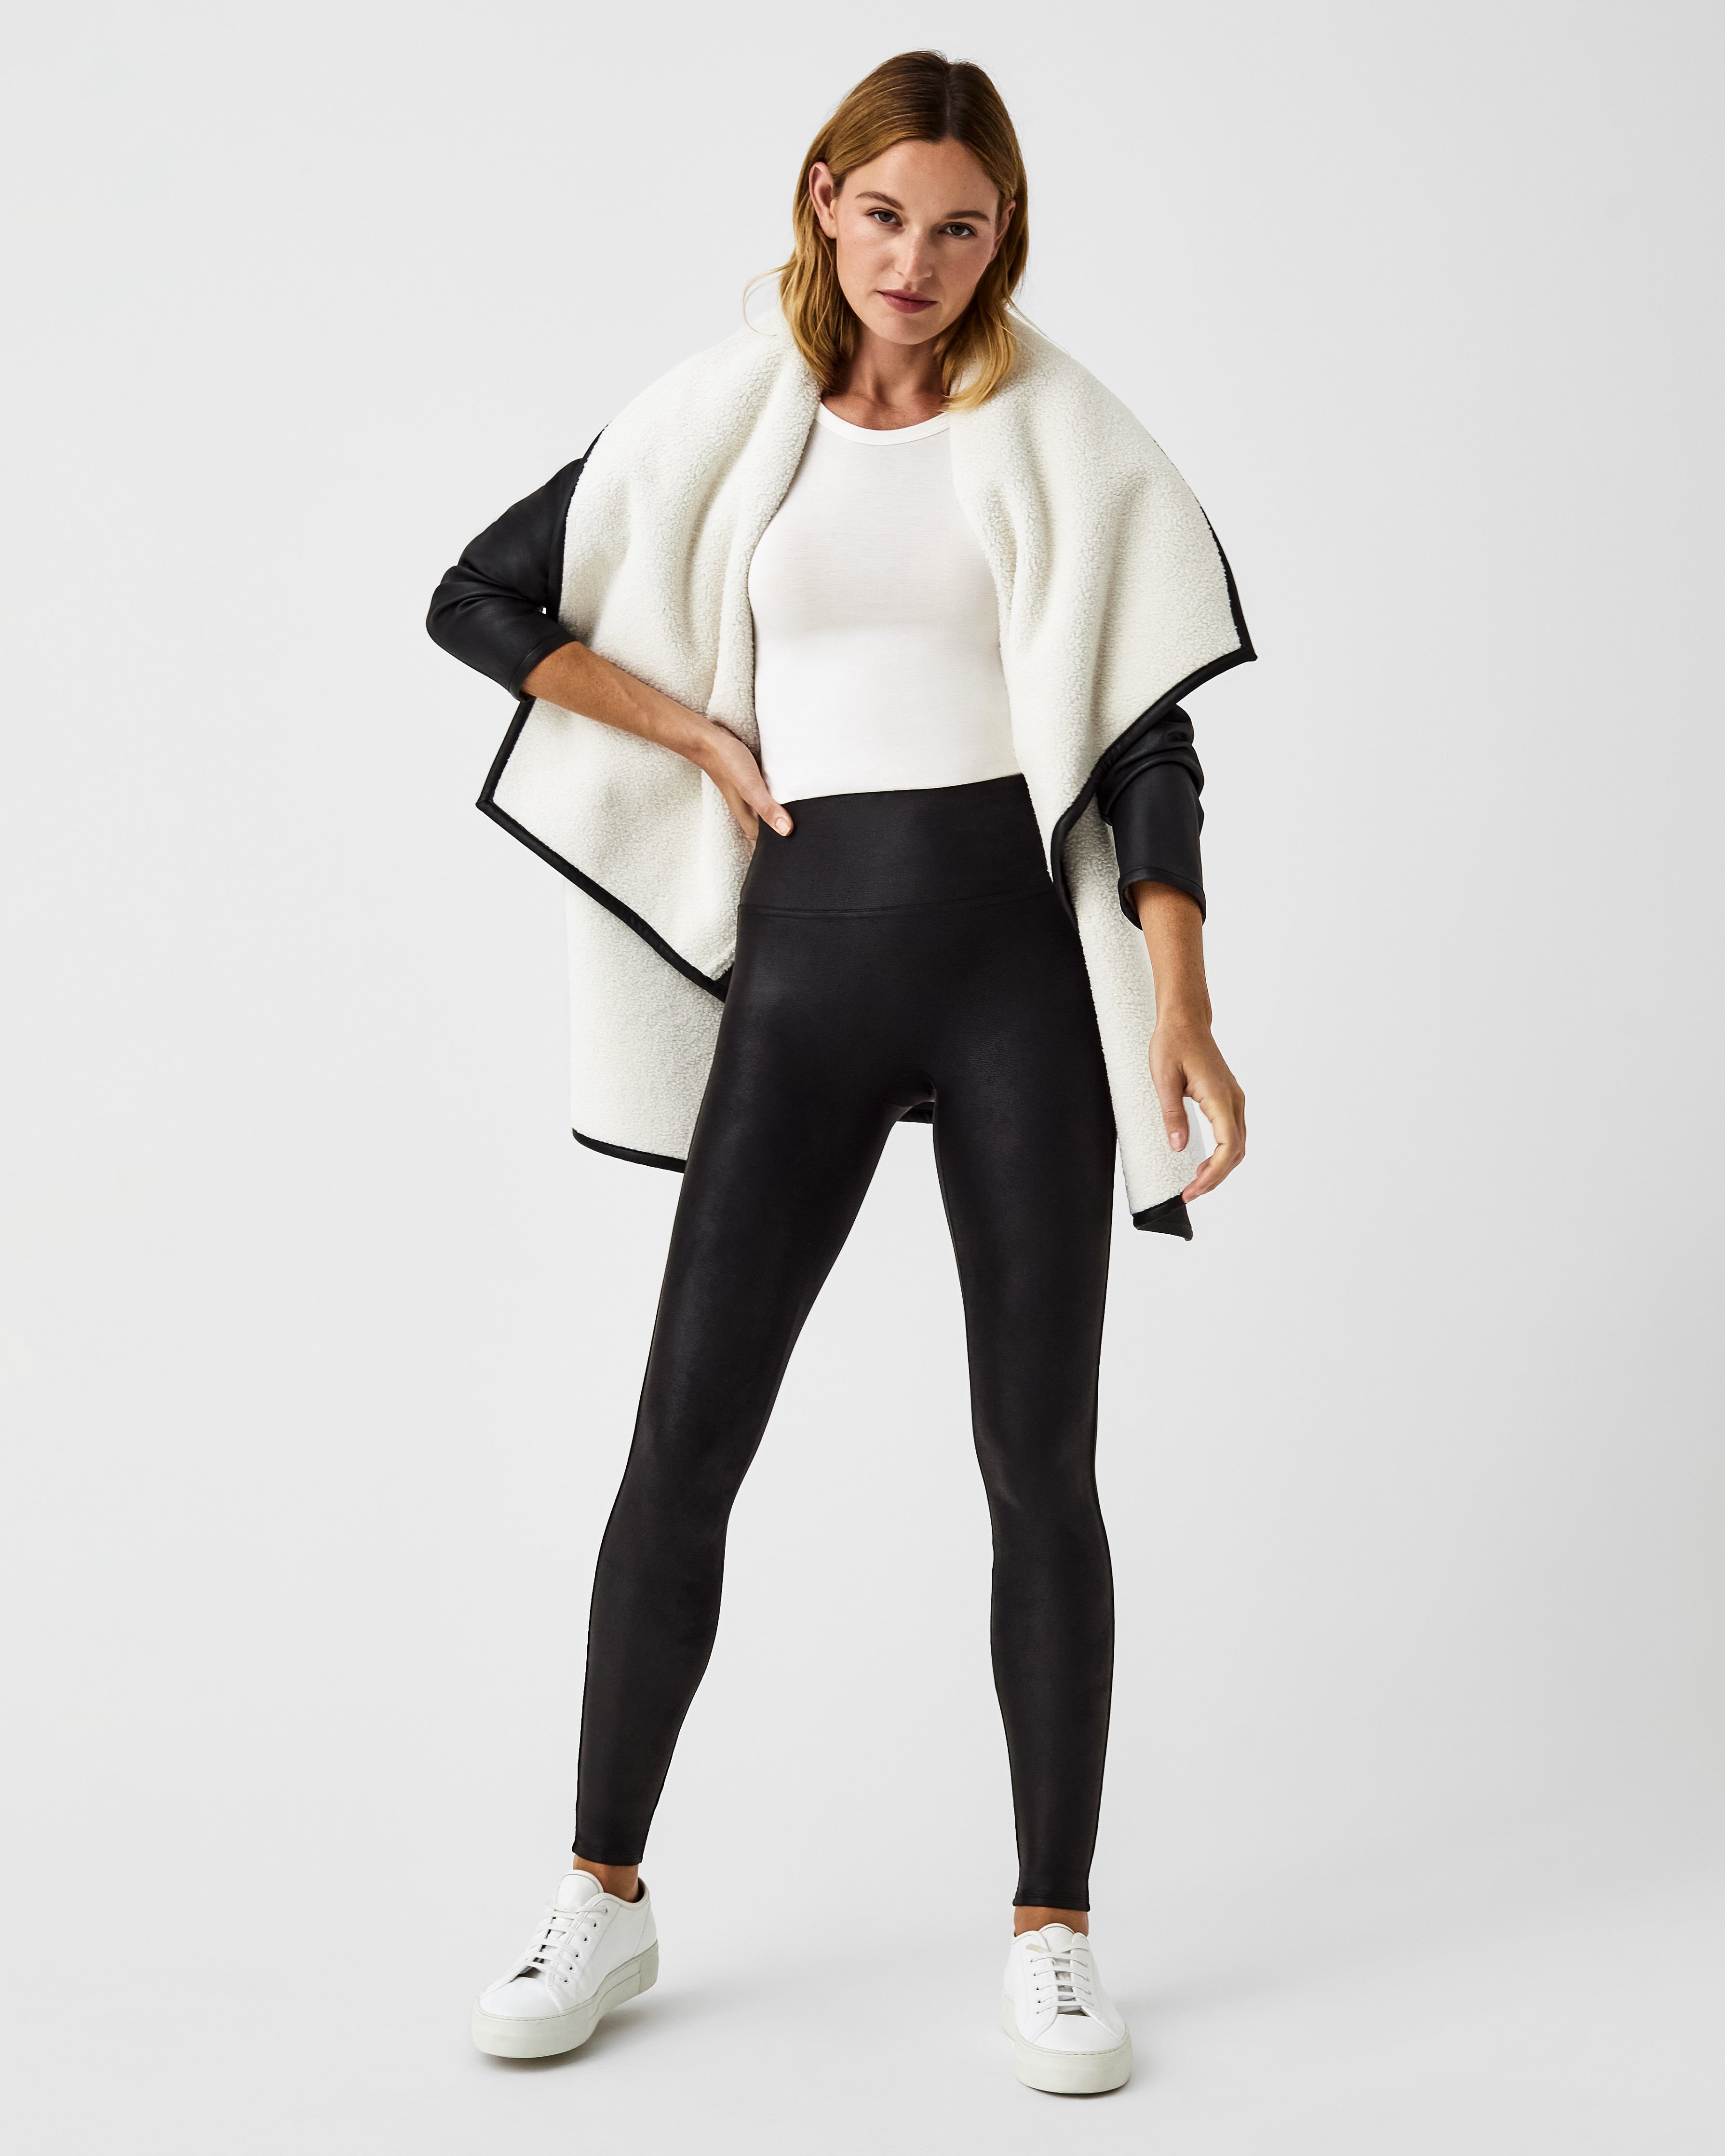 Women's Fleece Lined Leather Look Leggings High Waist Stretchy